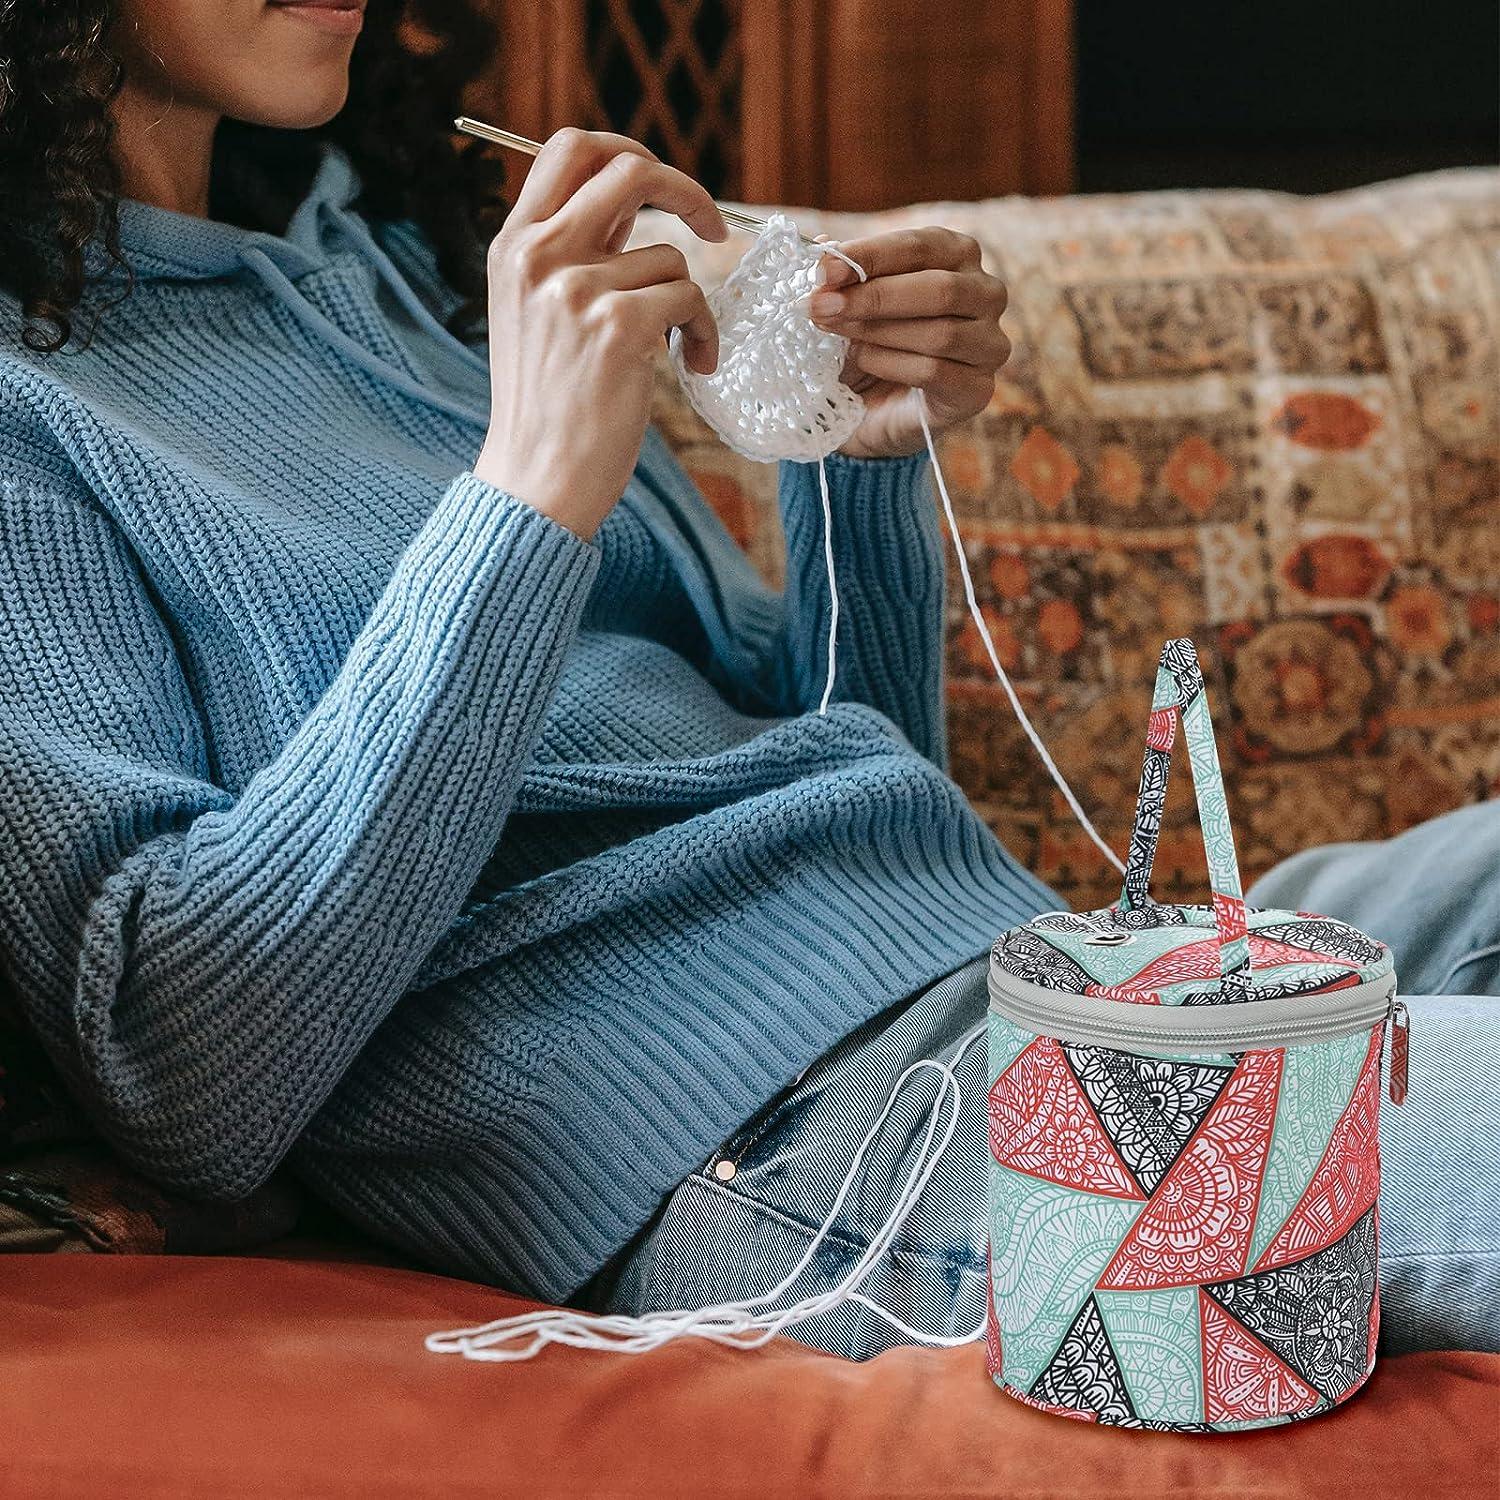 Round Knitting Wool Yarn Storage Bags Organizer Mini Knitting Bag